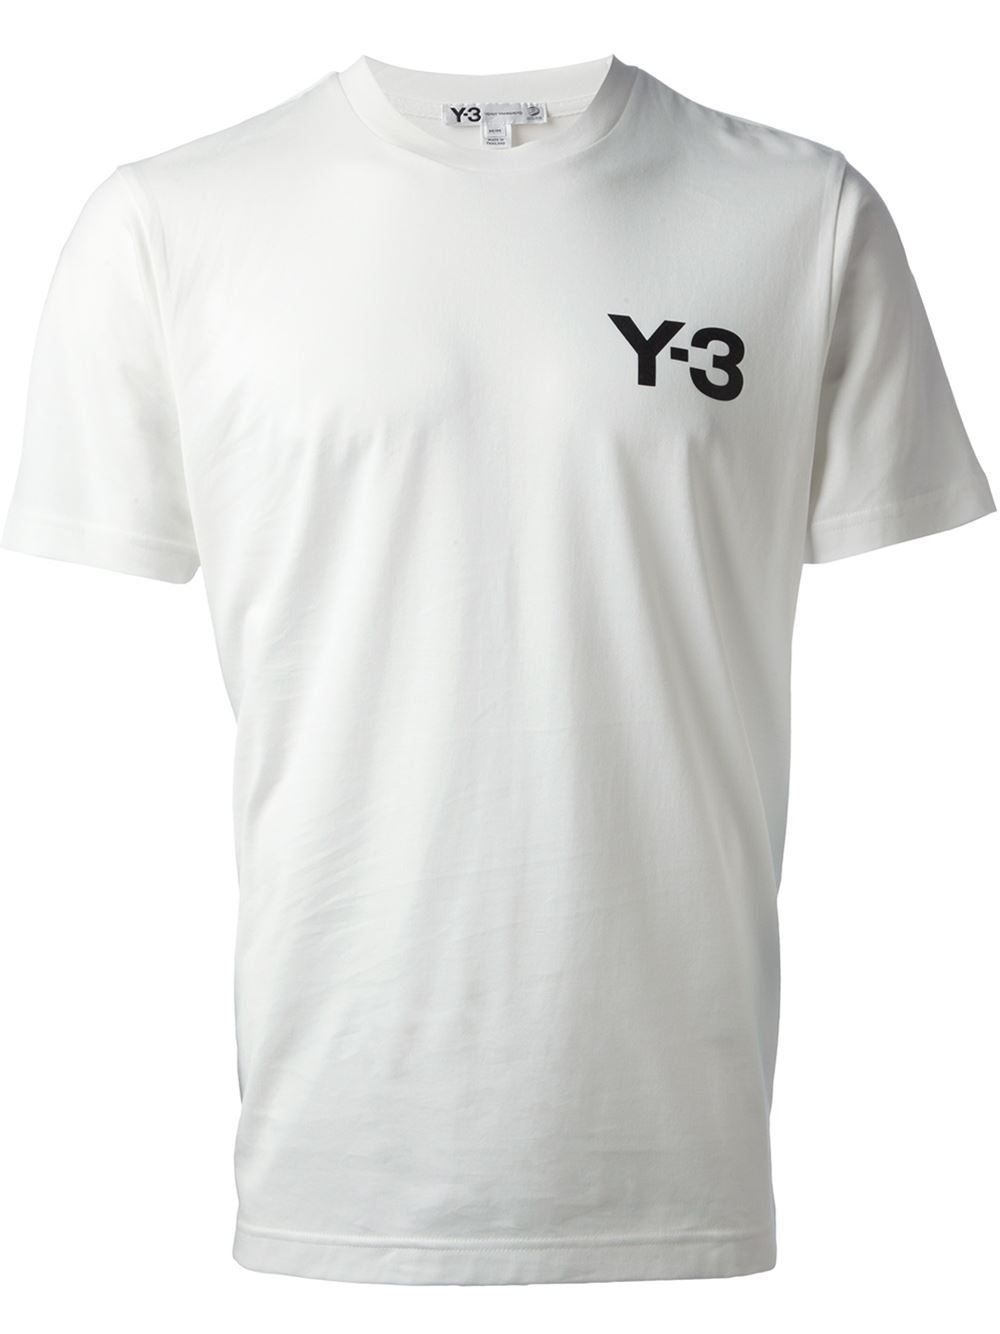 Y-3 Logo Tshirt in White for Men - Lyst